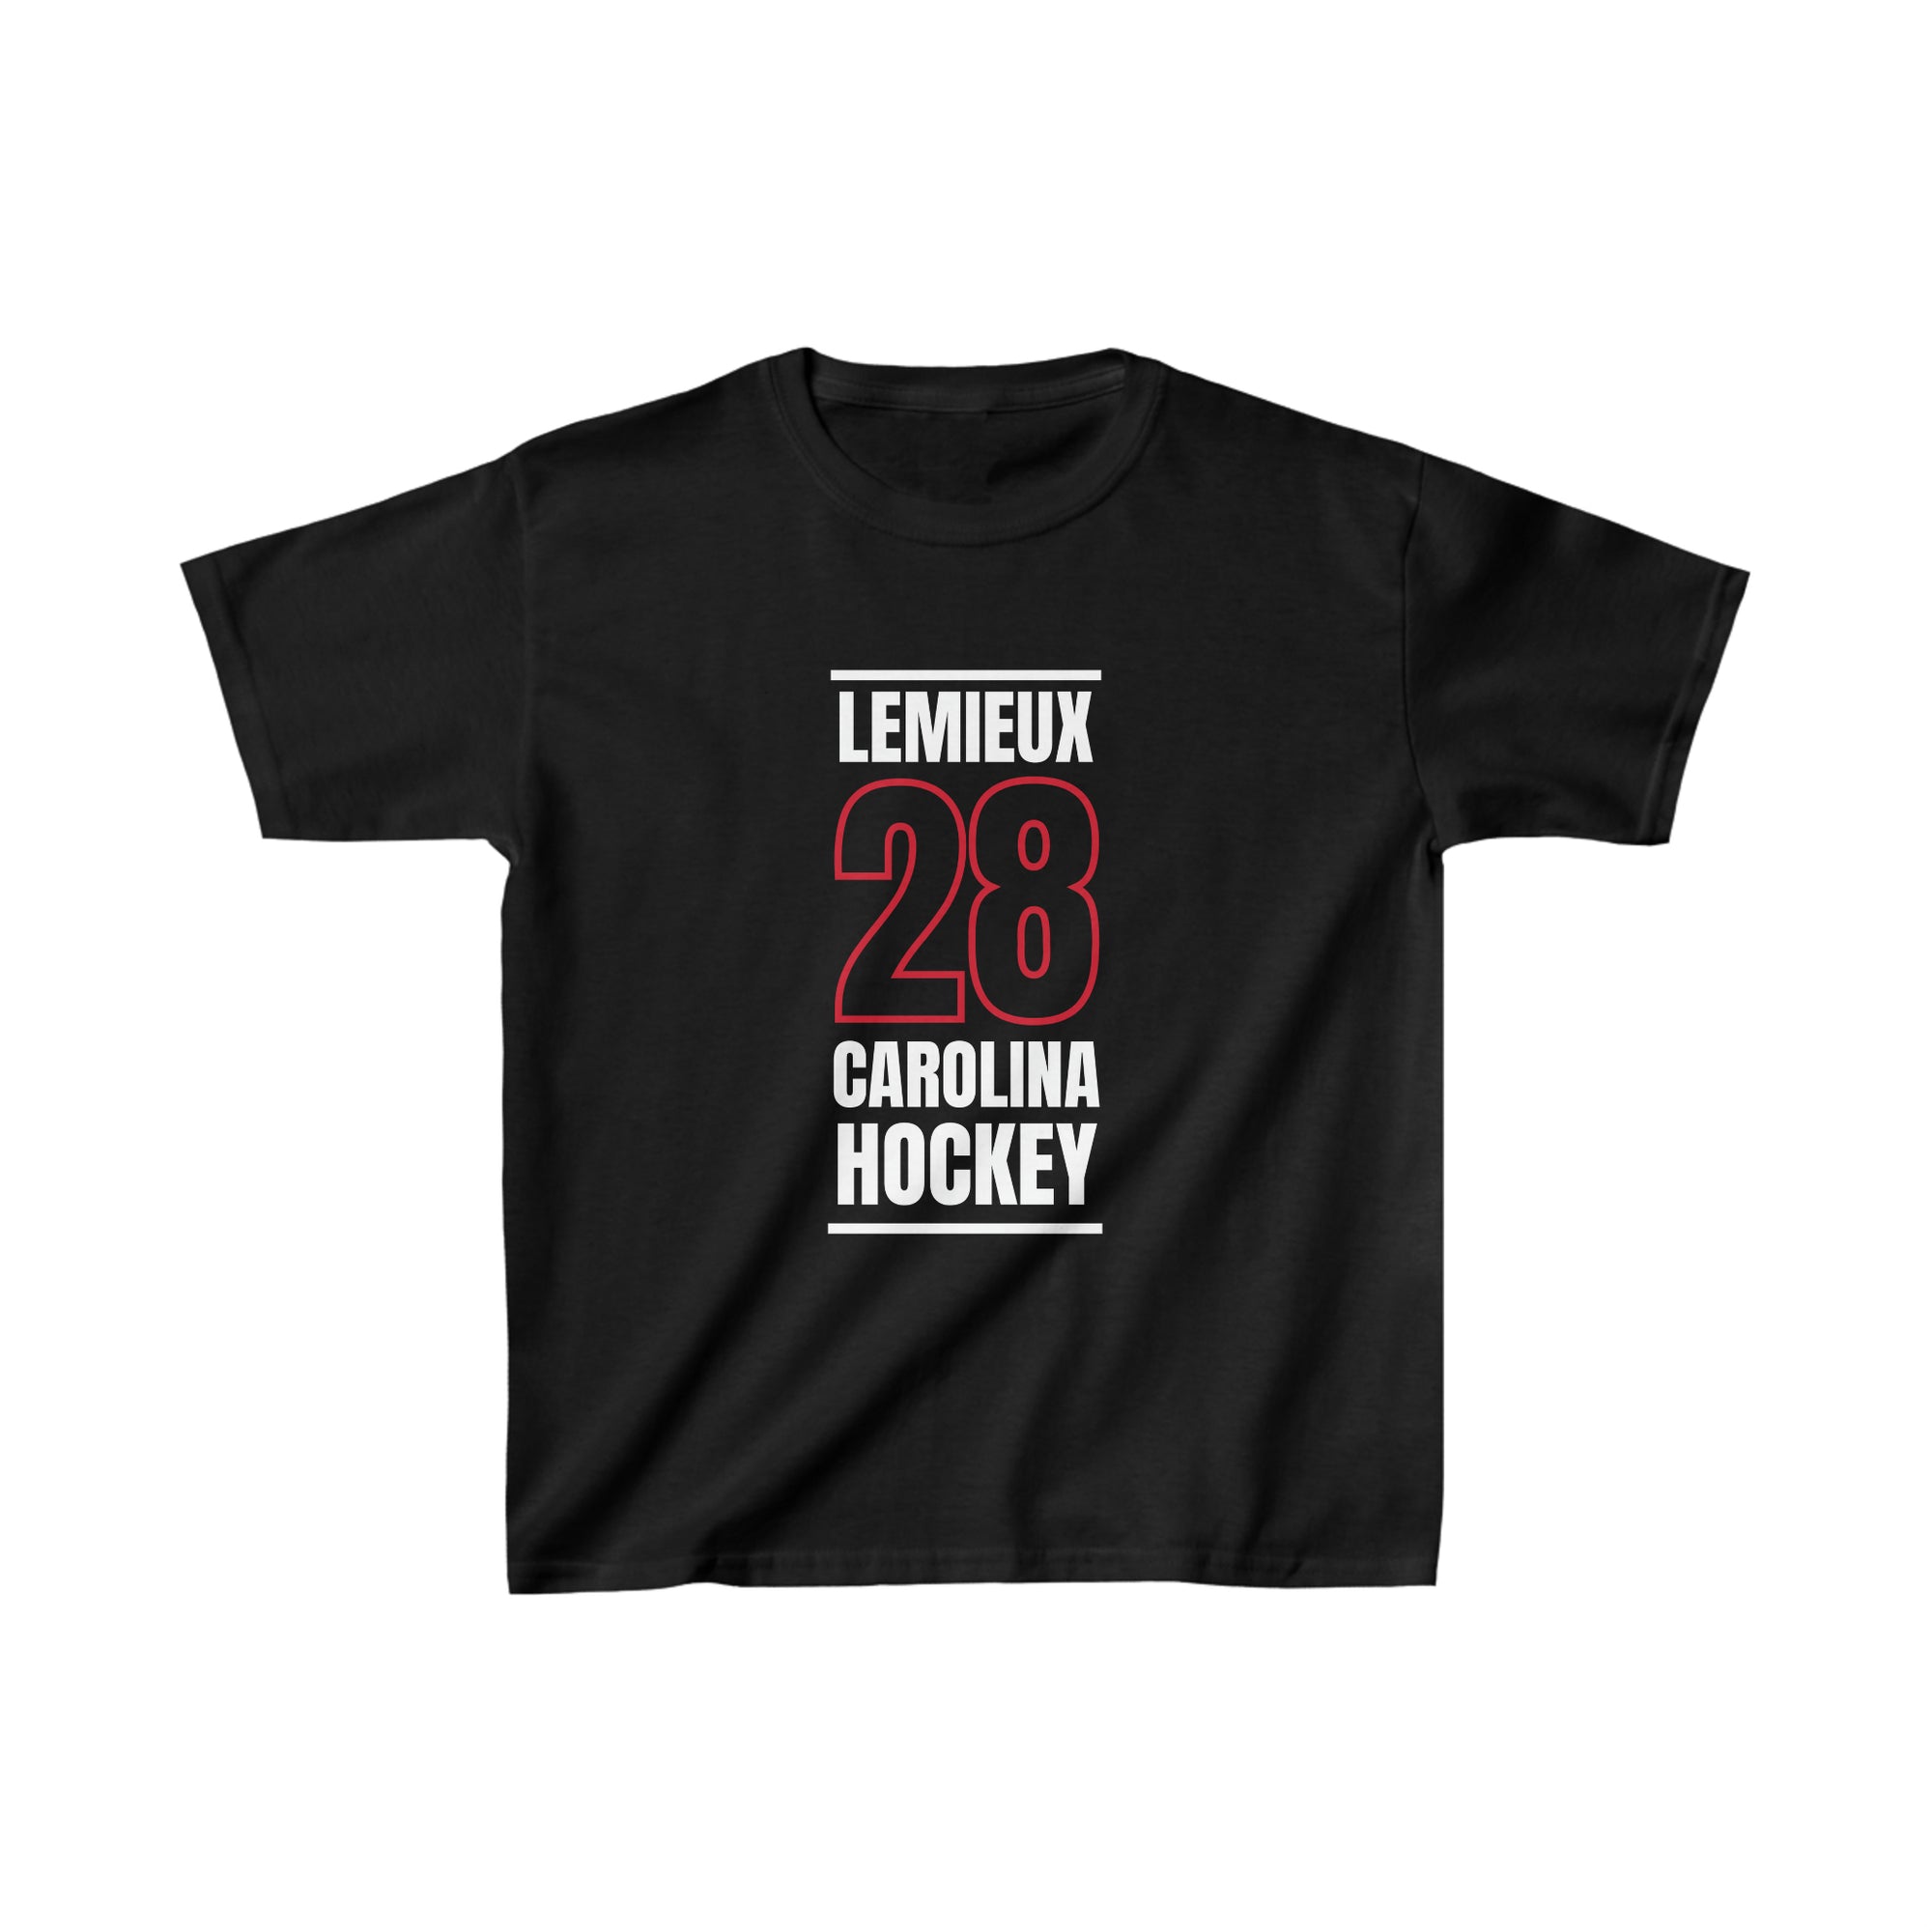 Lemieux 28 Carolina Hockey Black Vertical Design Kids Tee